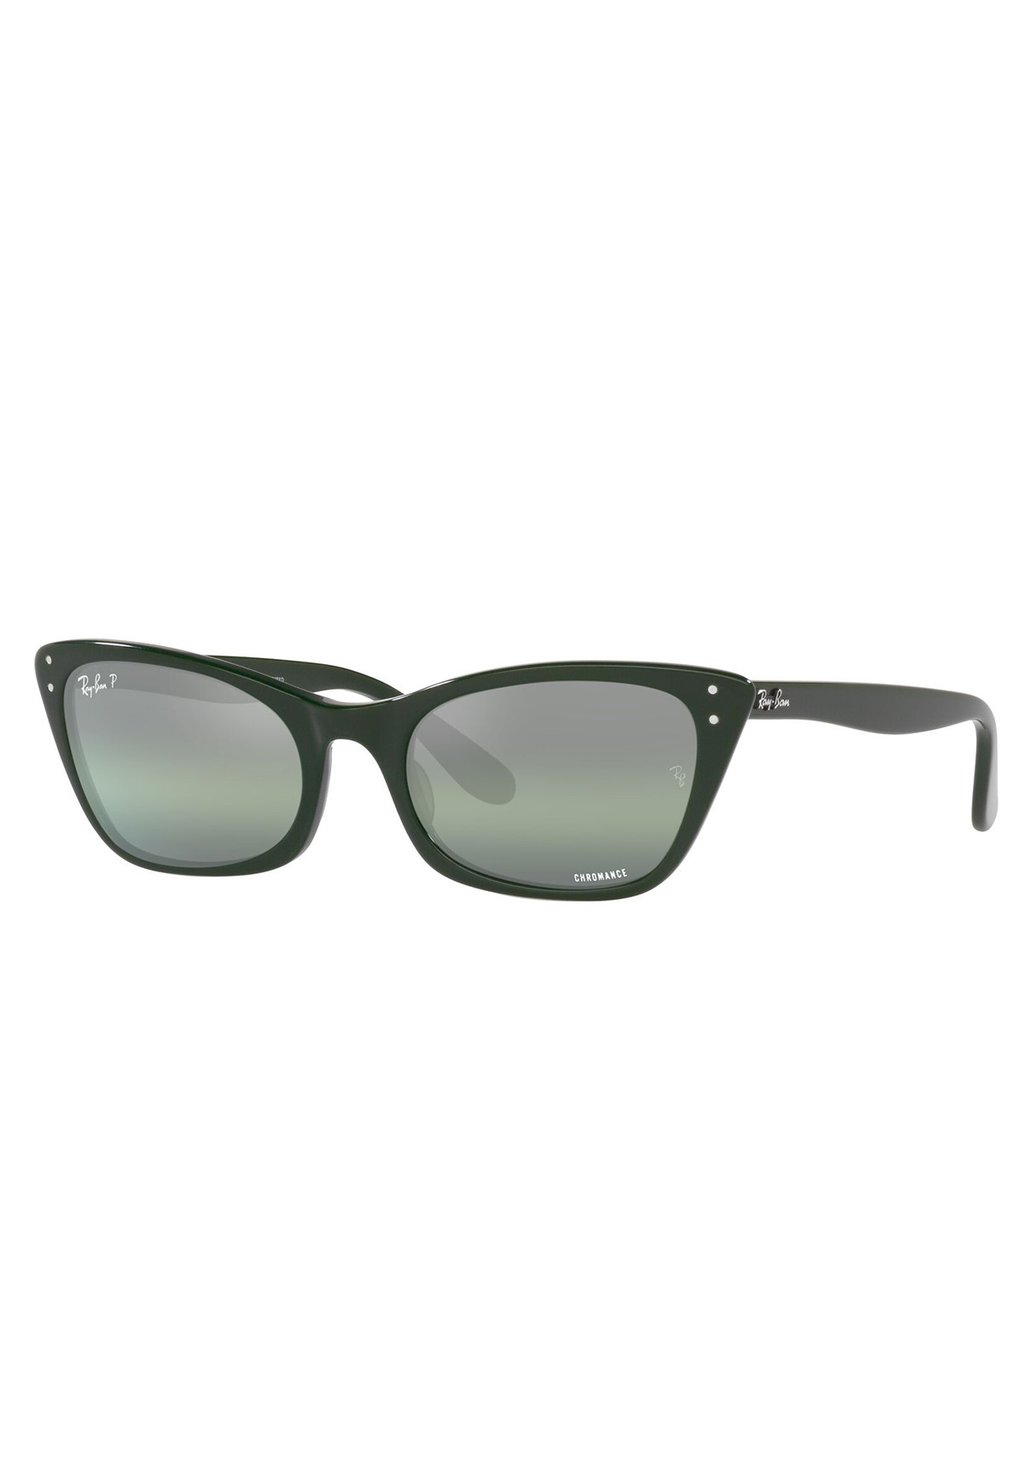 Солнцезащитные очки Polarizzati Ray-Ban, зеленый